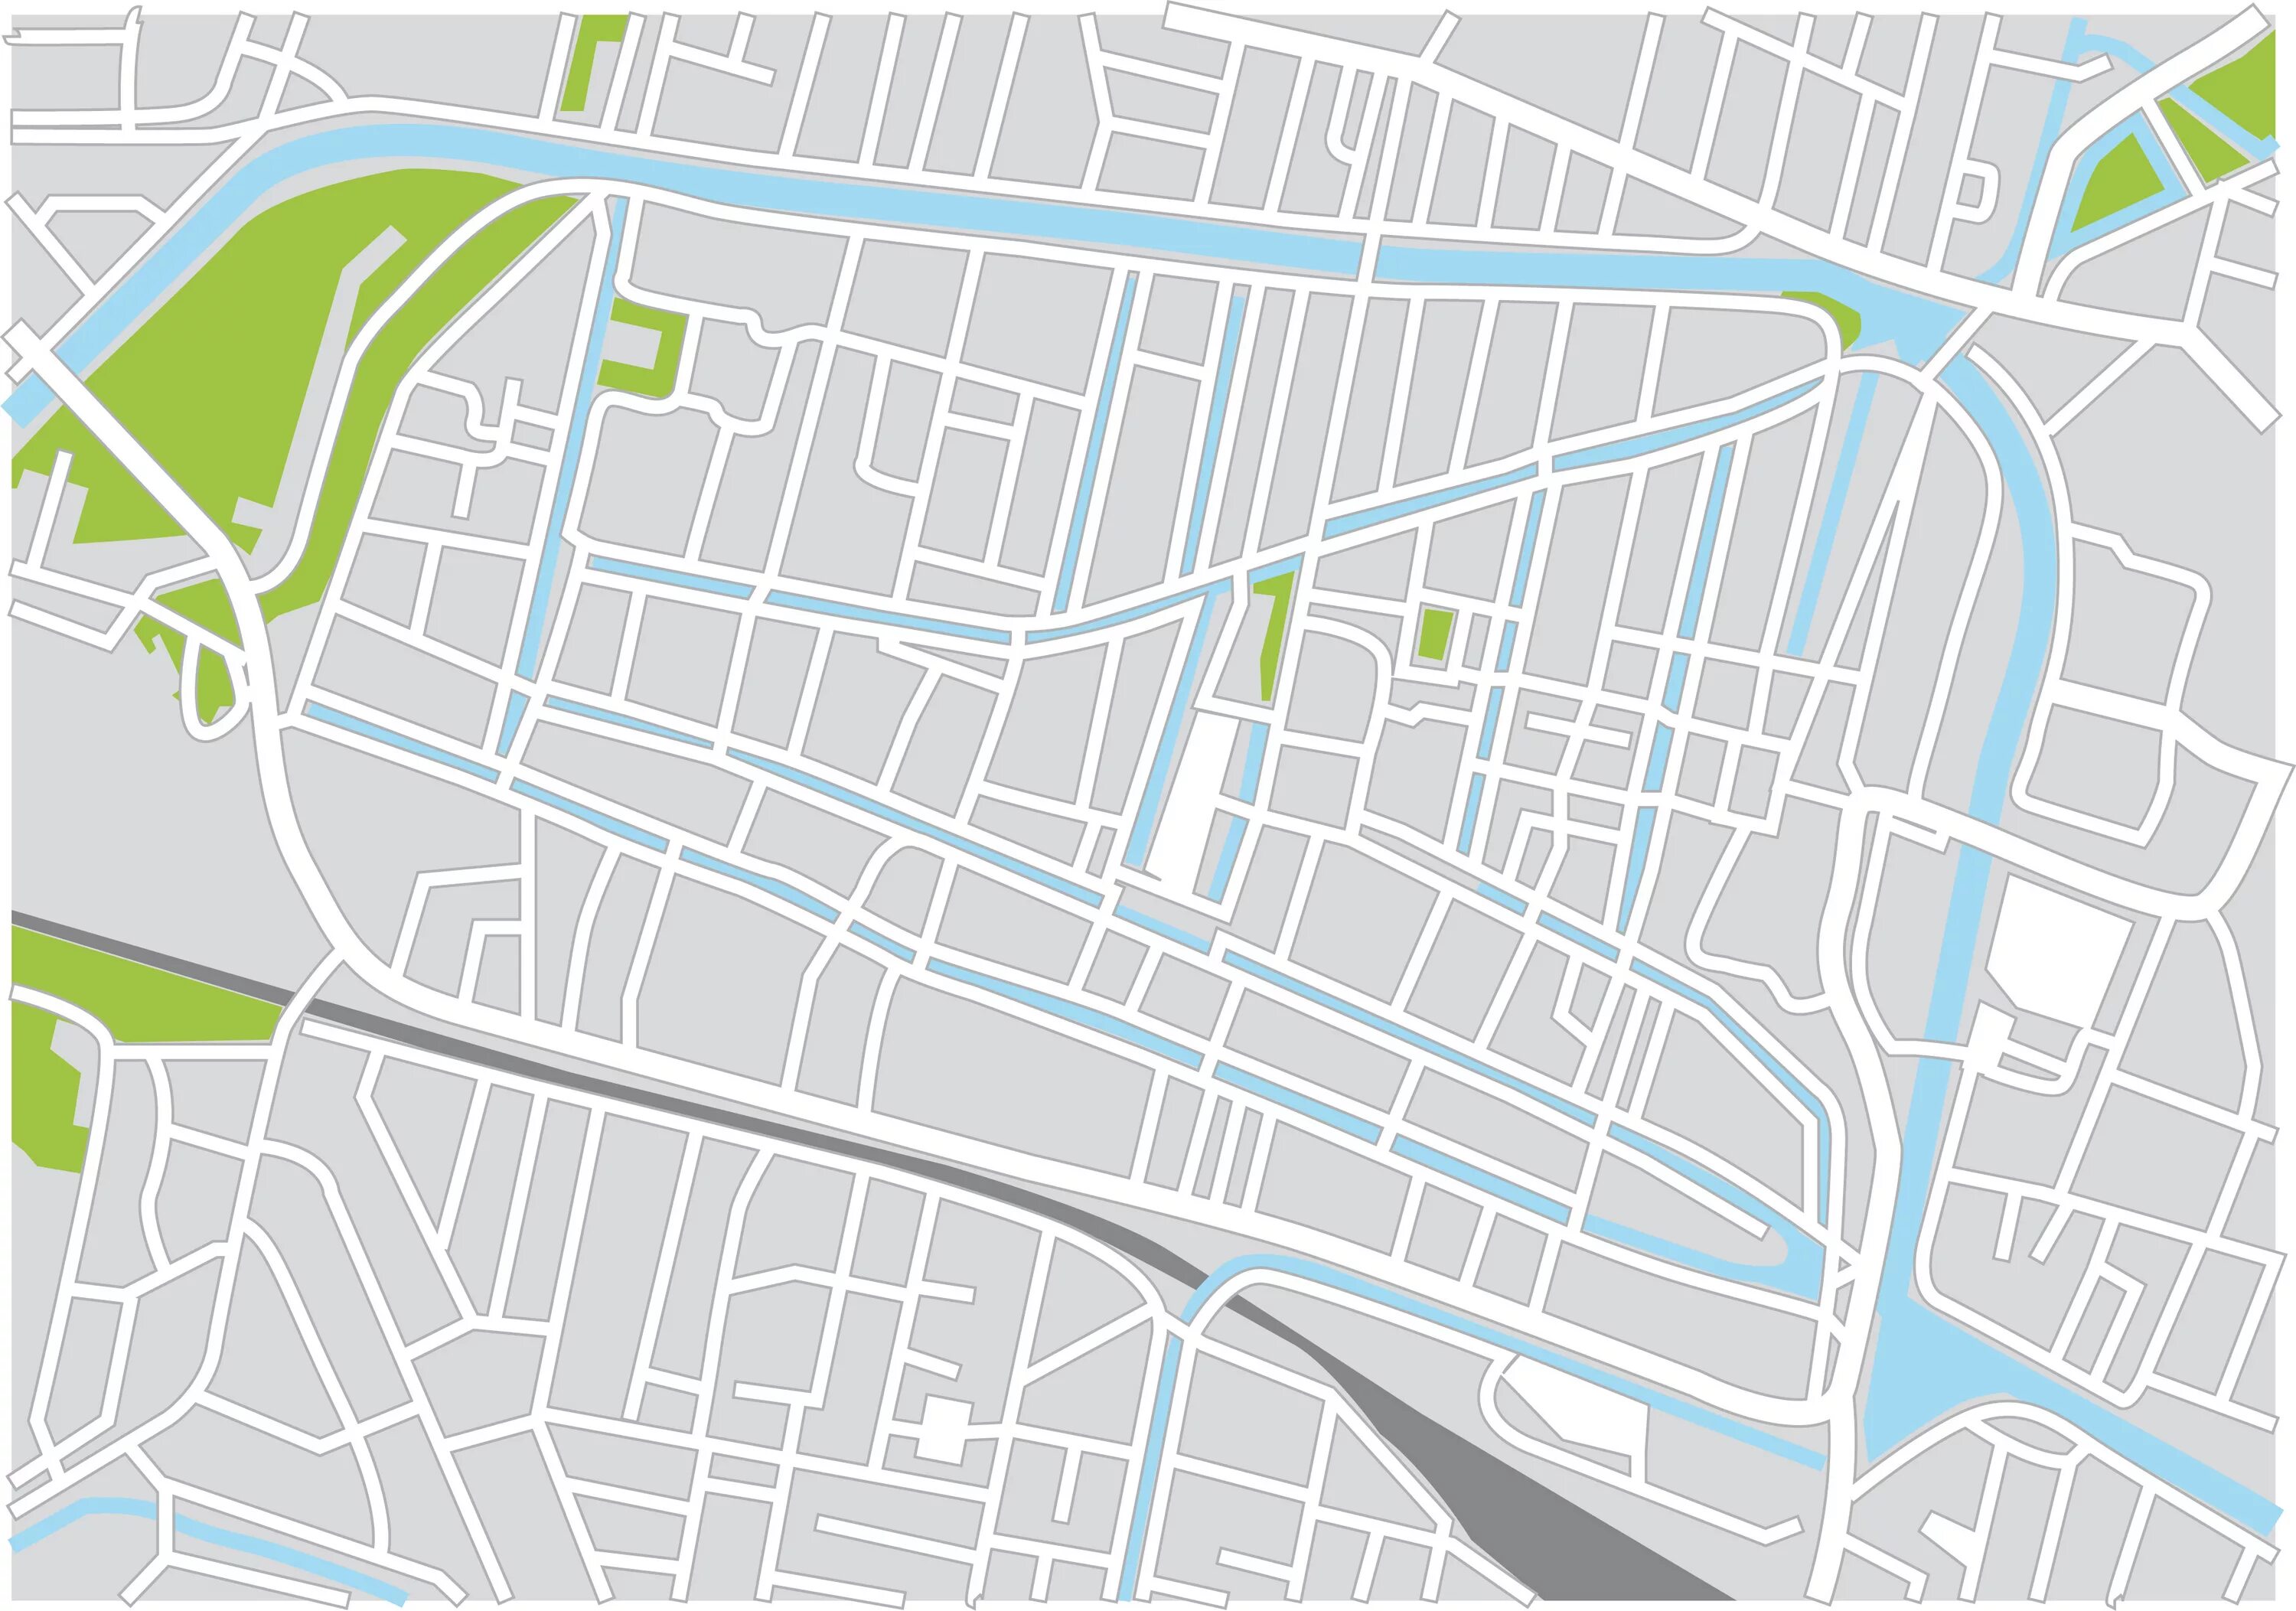 Карта города. Карта города вектор. Карта города без названий улиц. План города вектор. Http www maps